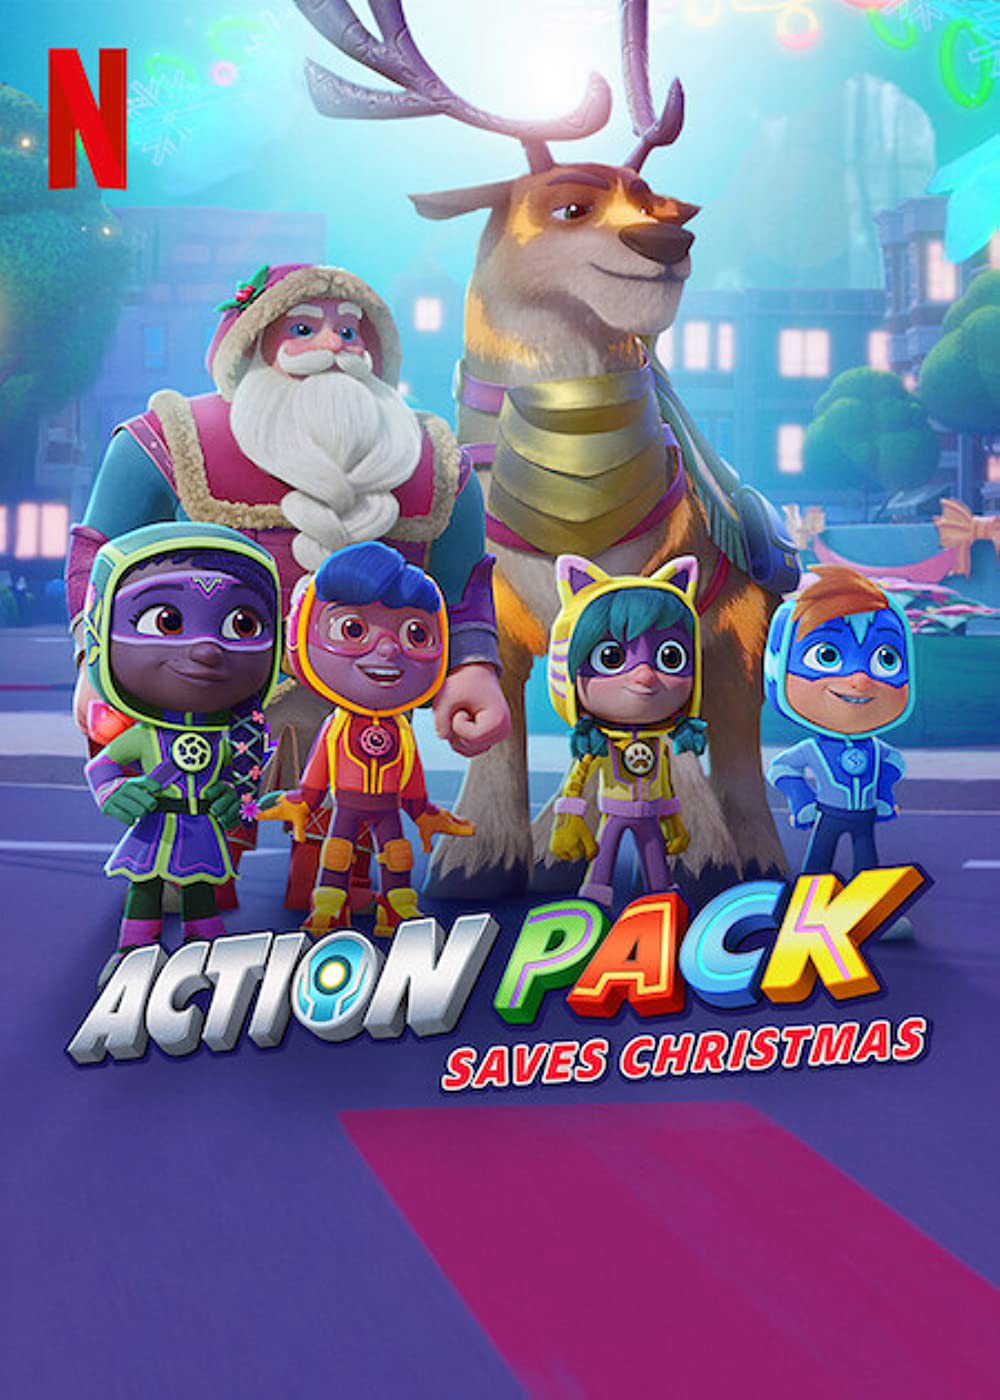 Action Pack giải cứu Giáng sinh 2022